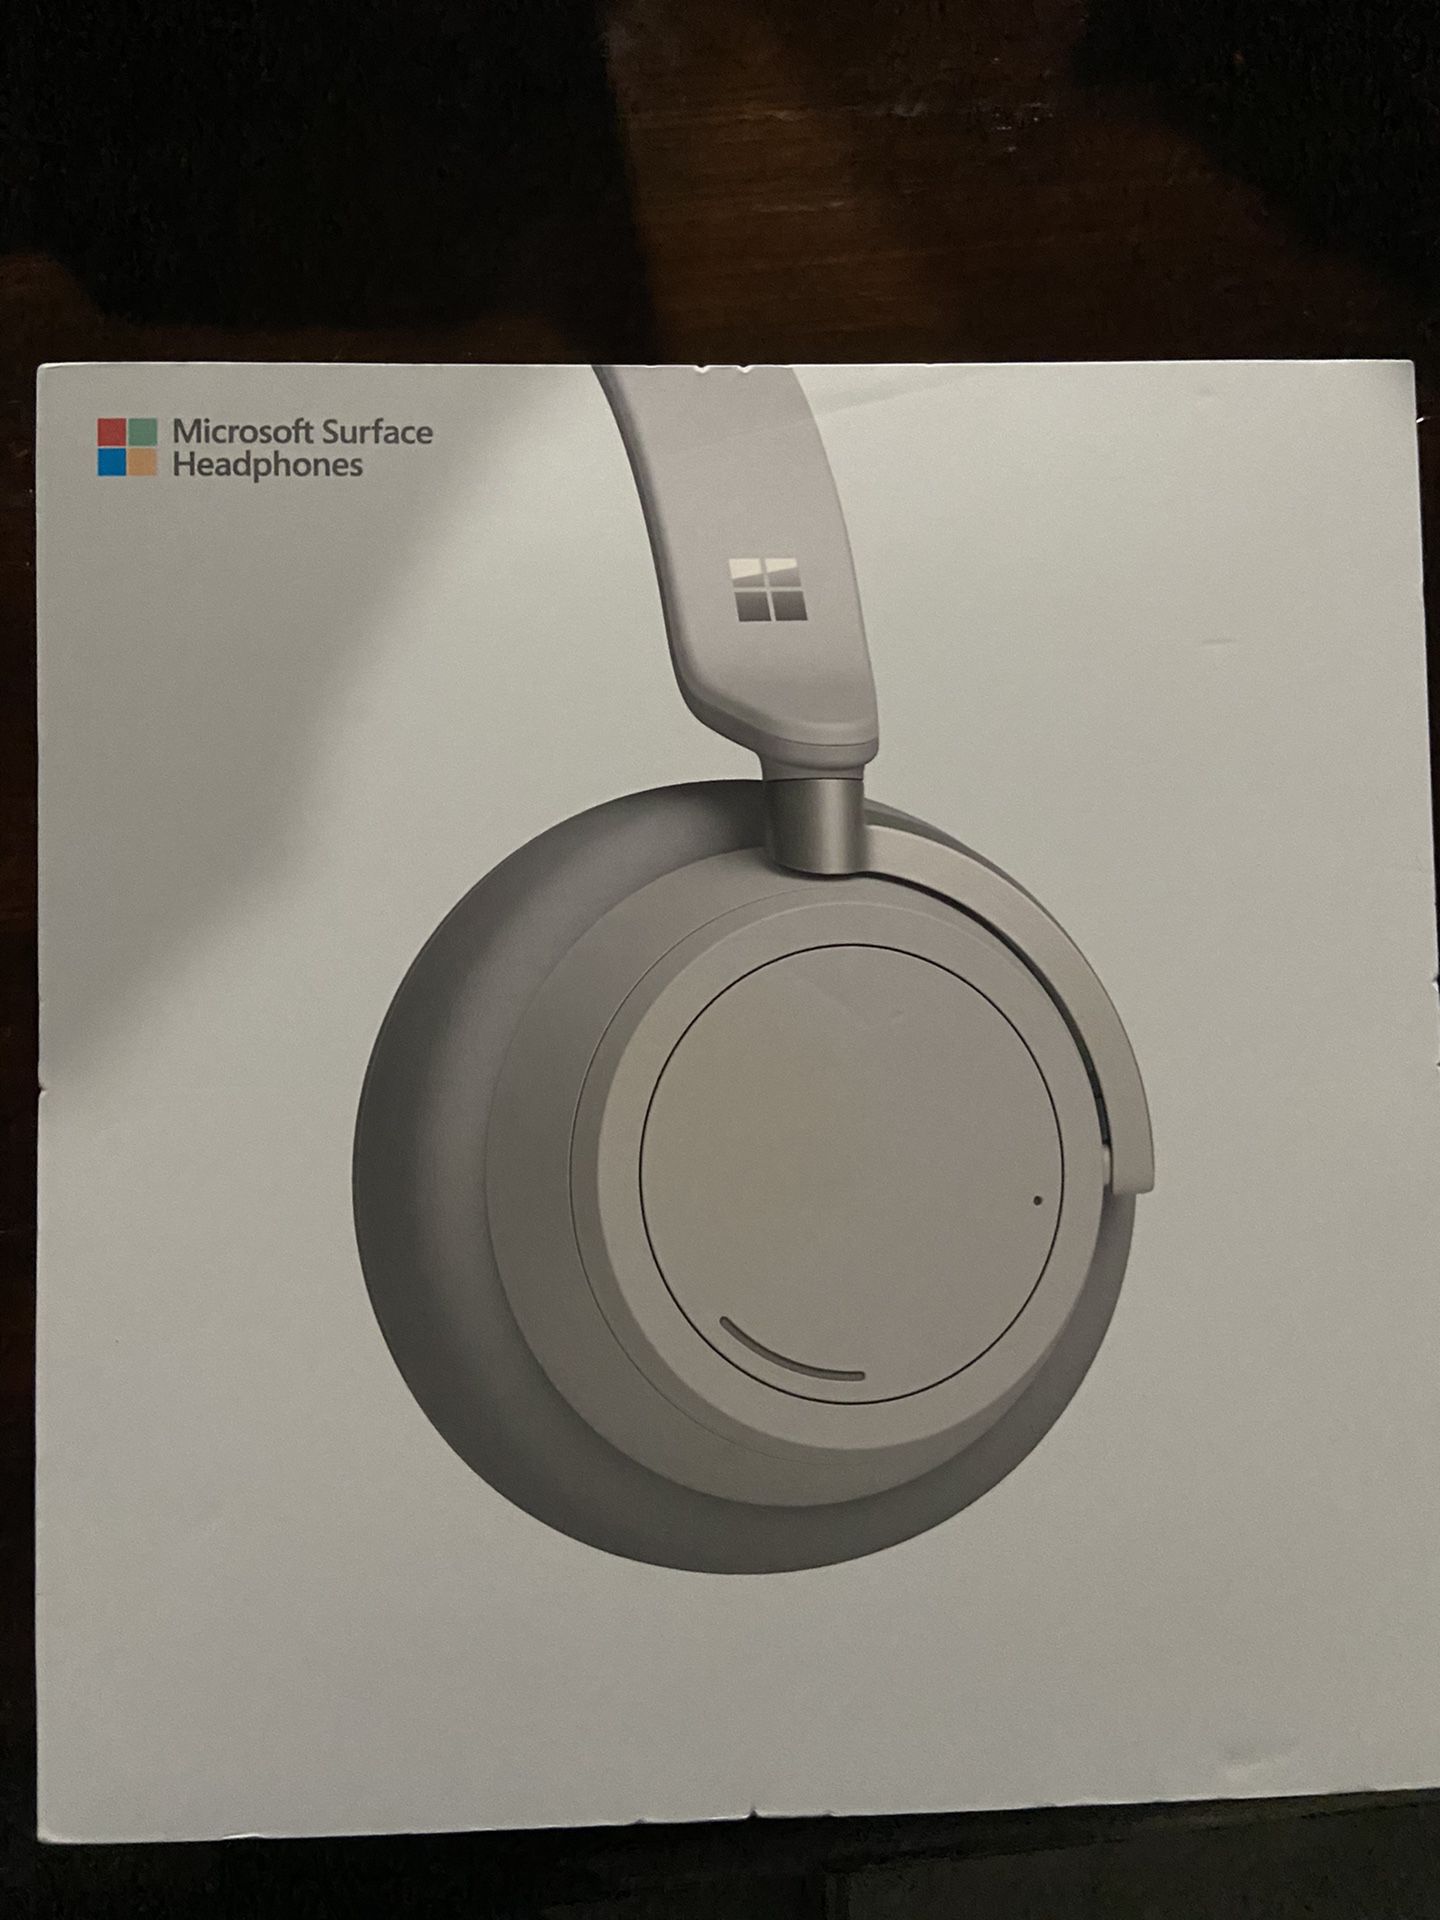 Microsoft surface headphones